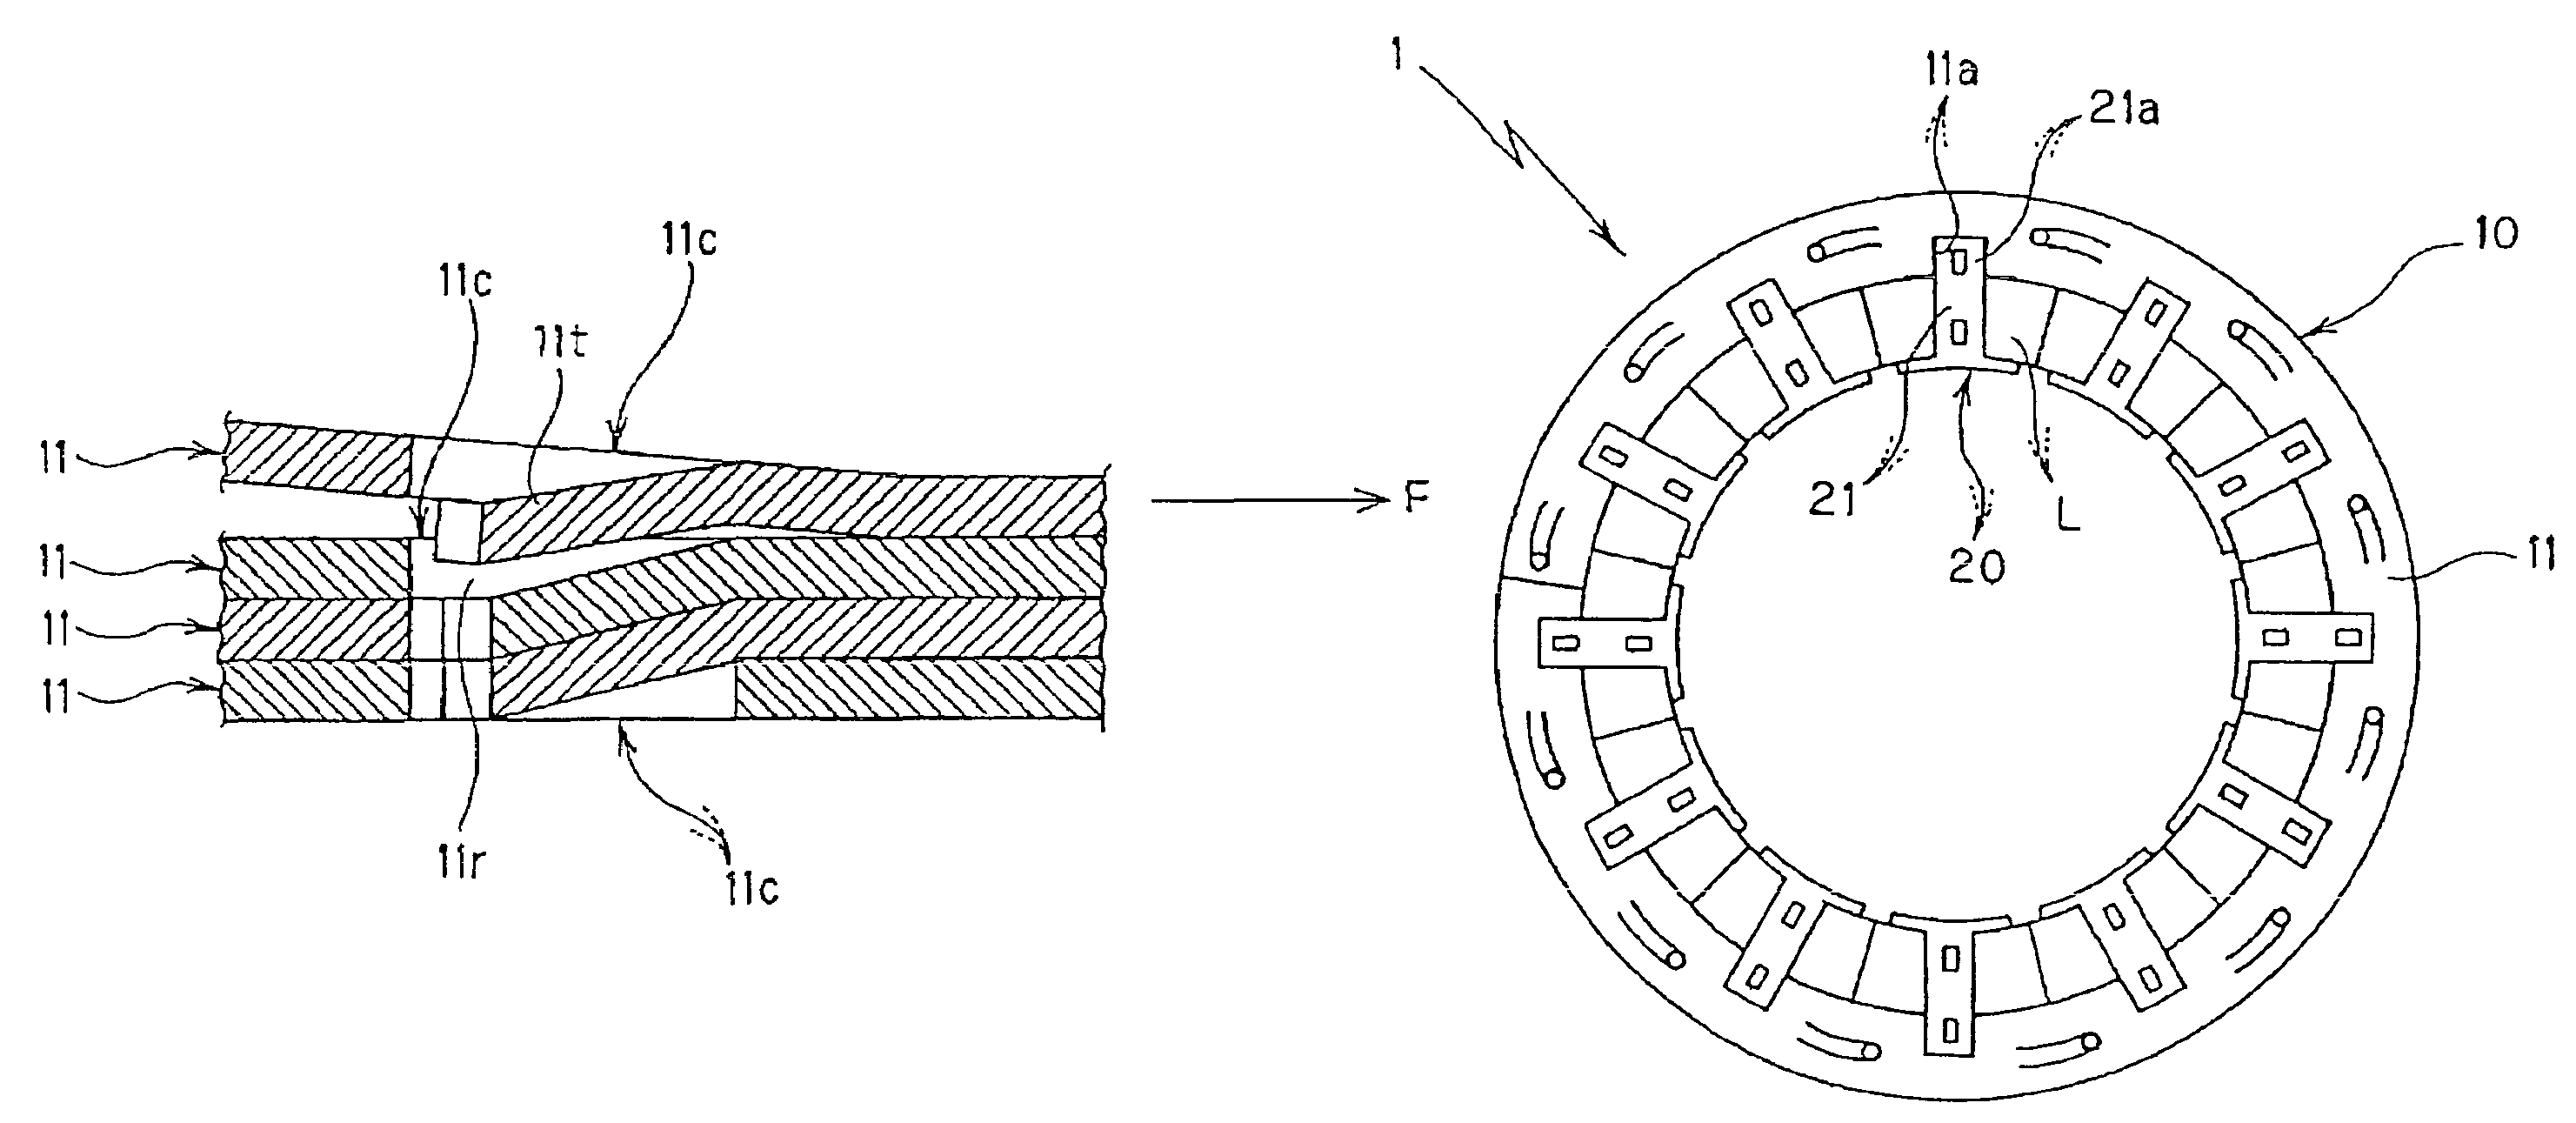 Method of manufacturing laminated core